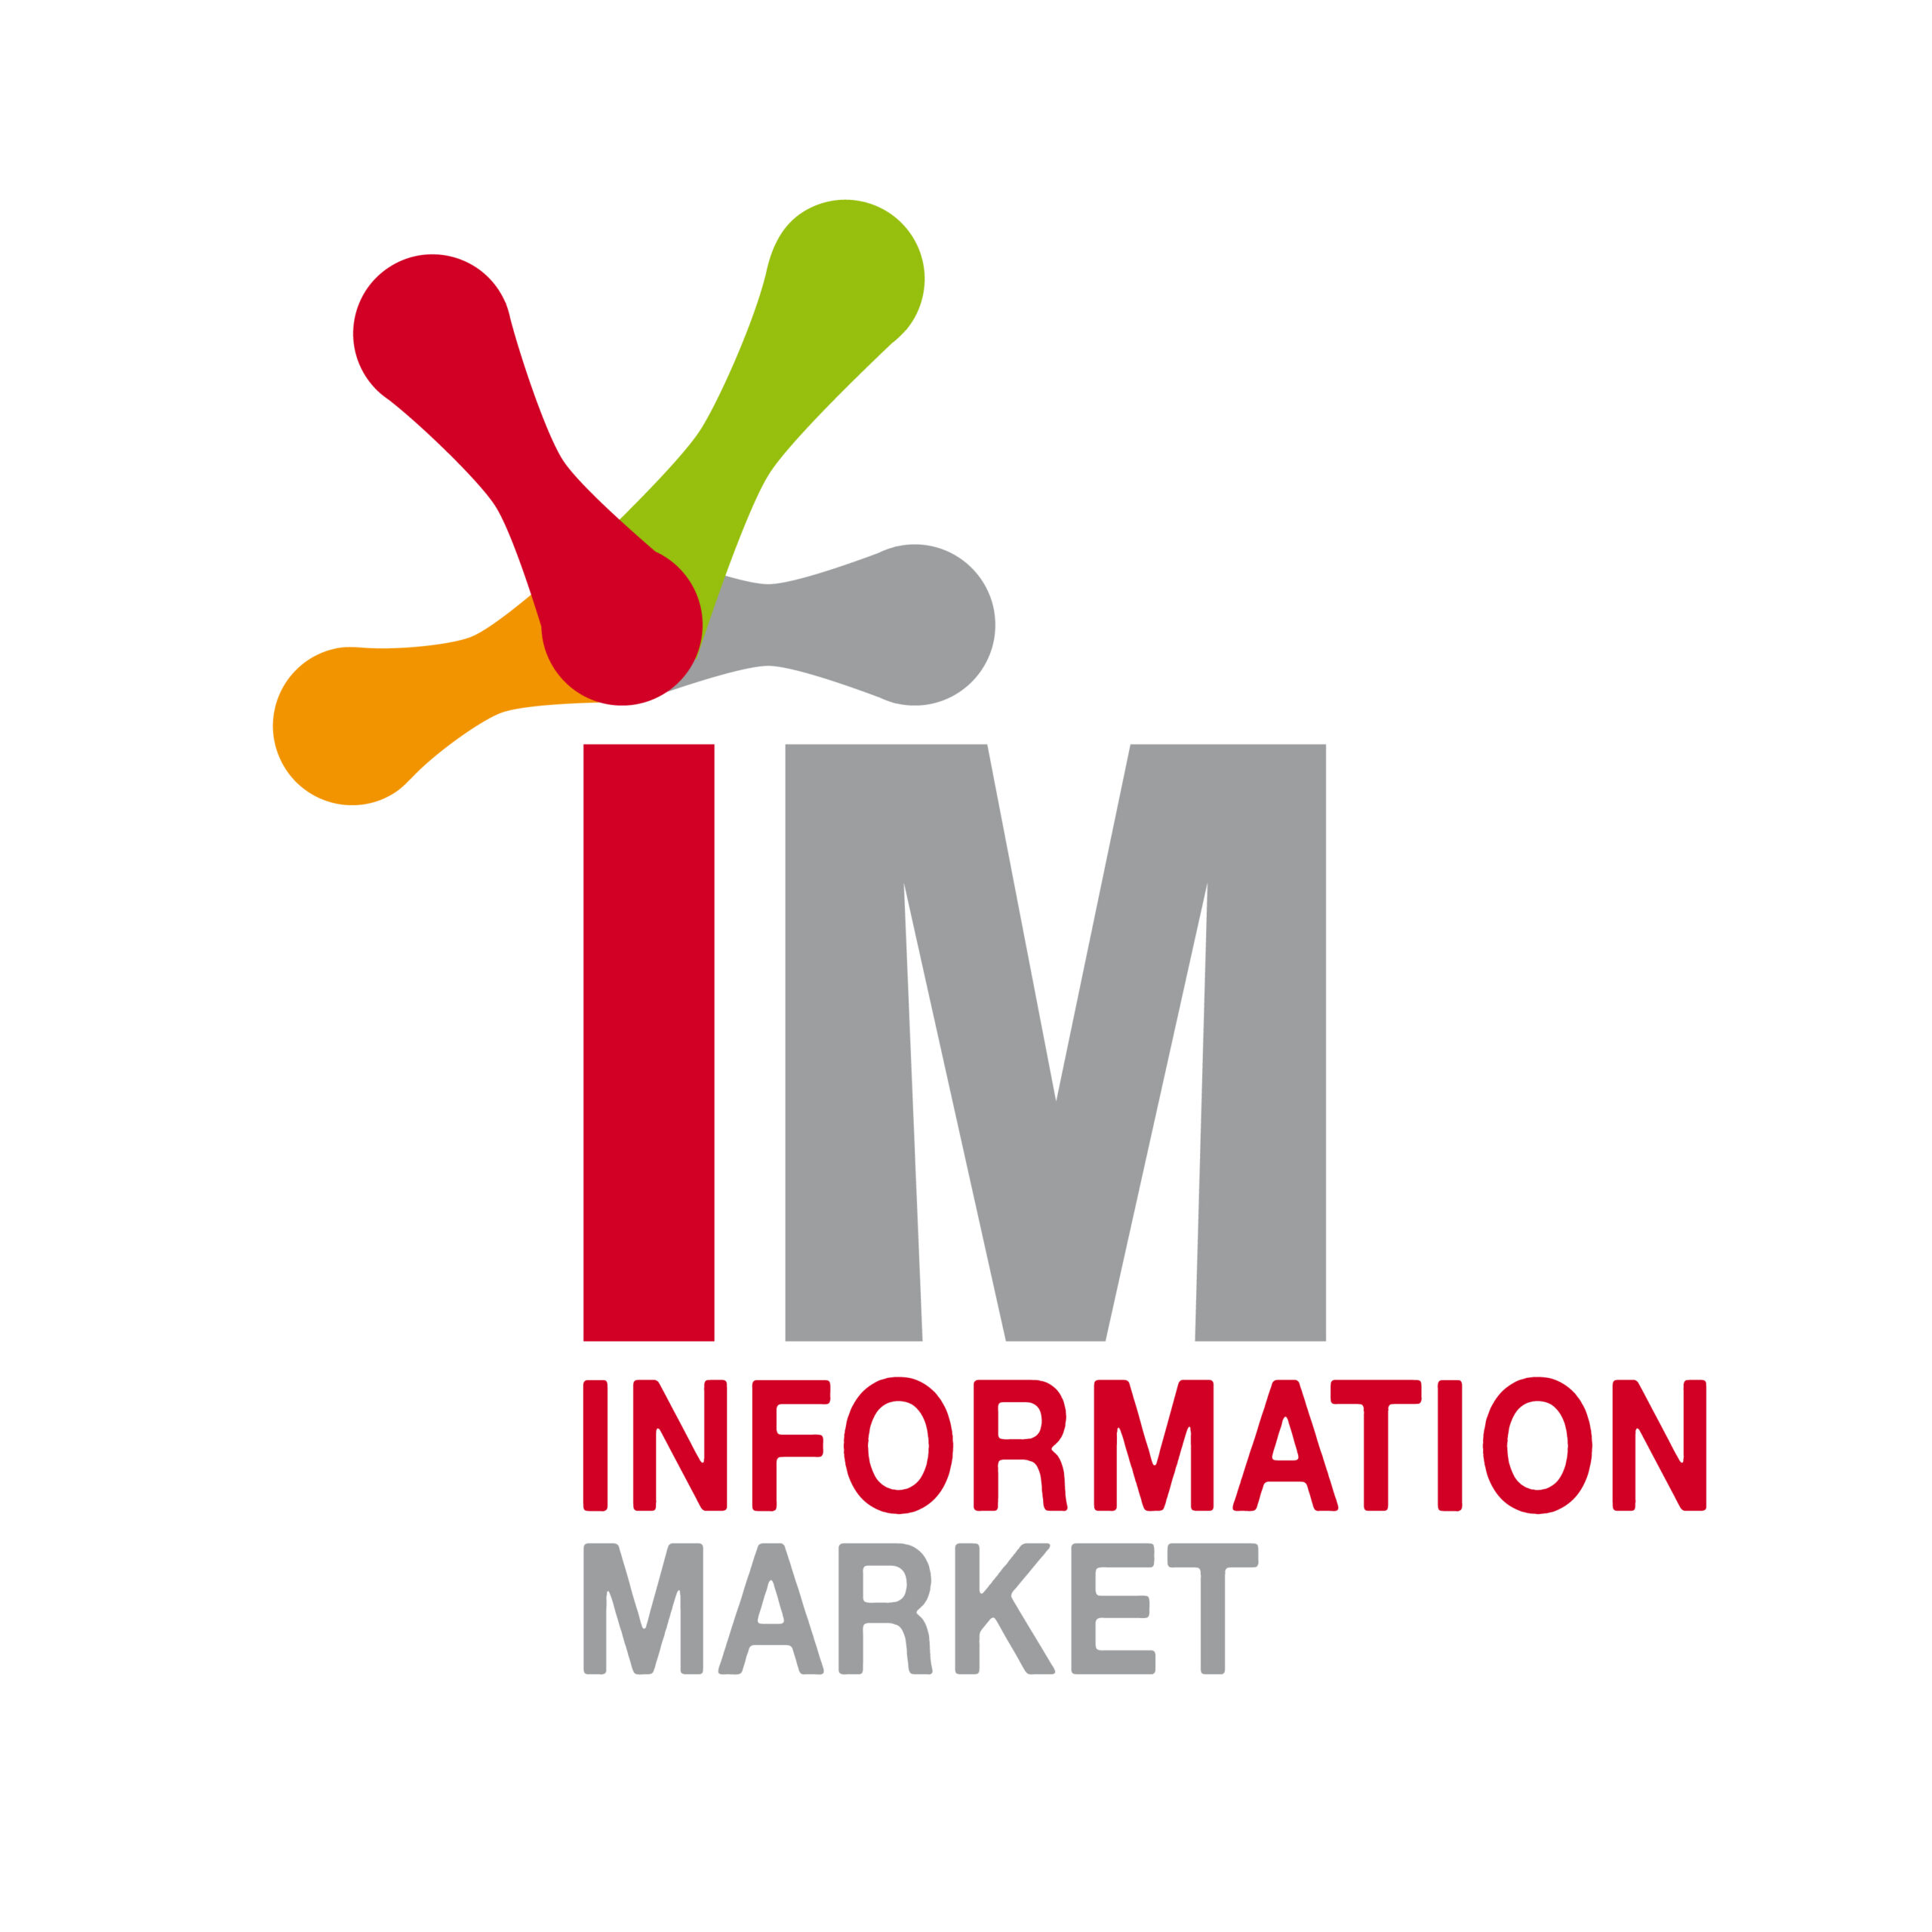 Information Market S.A.